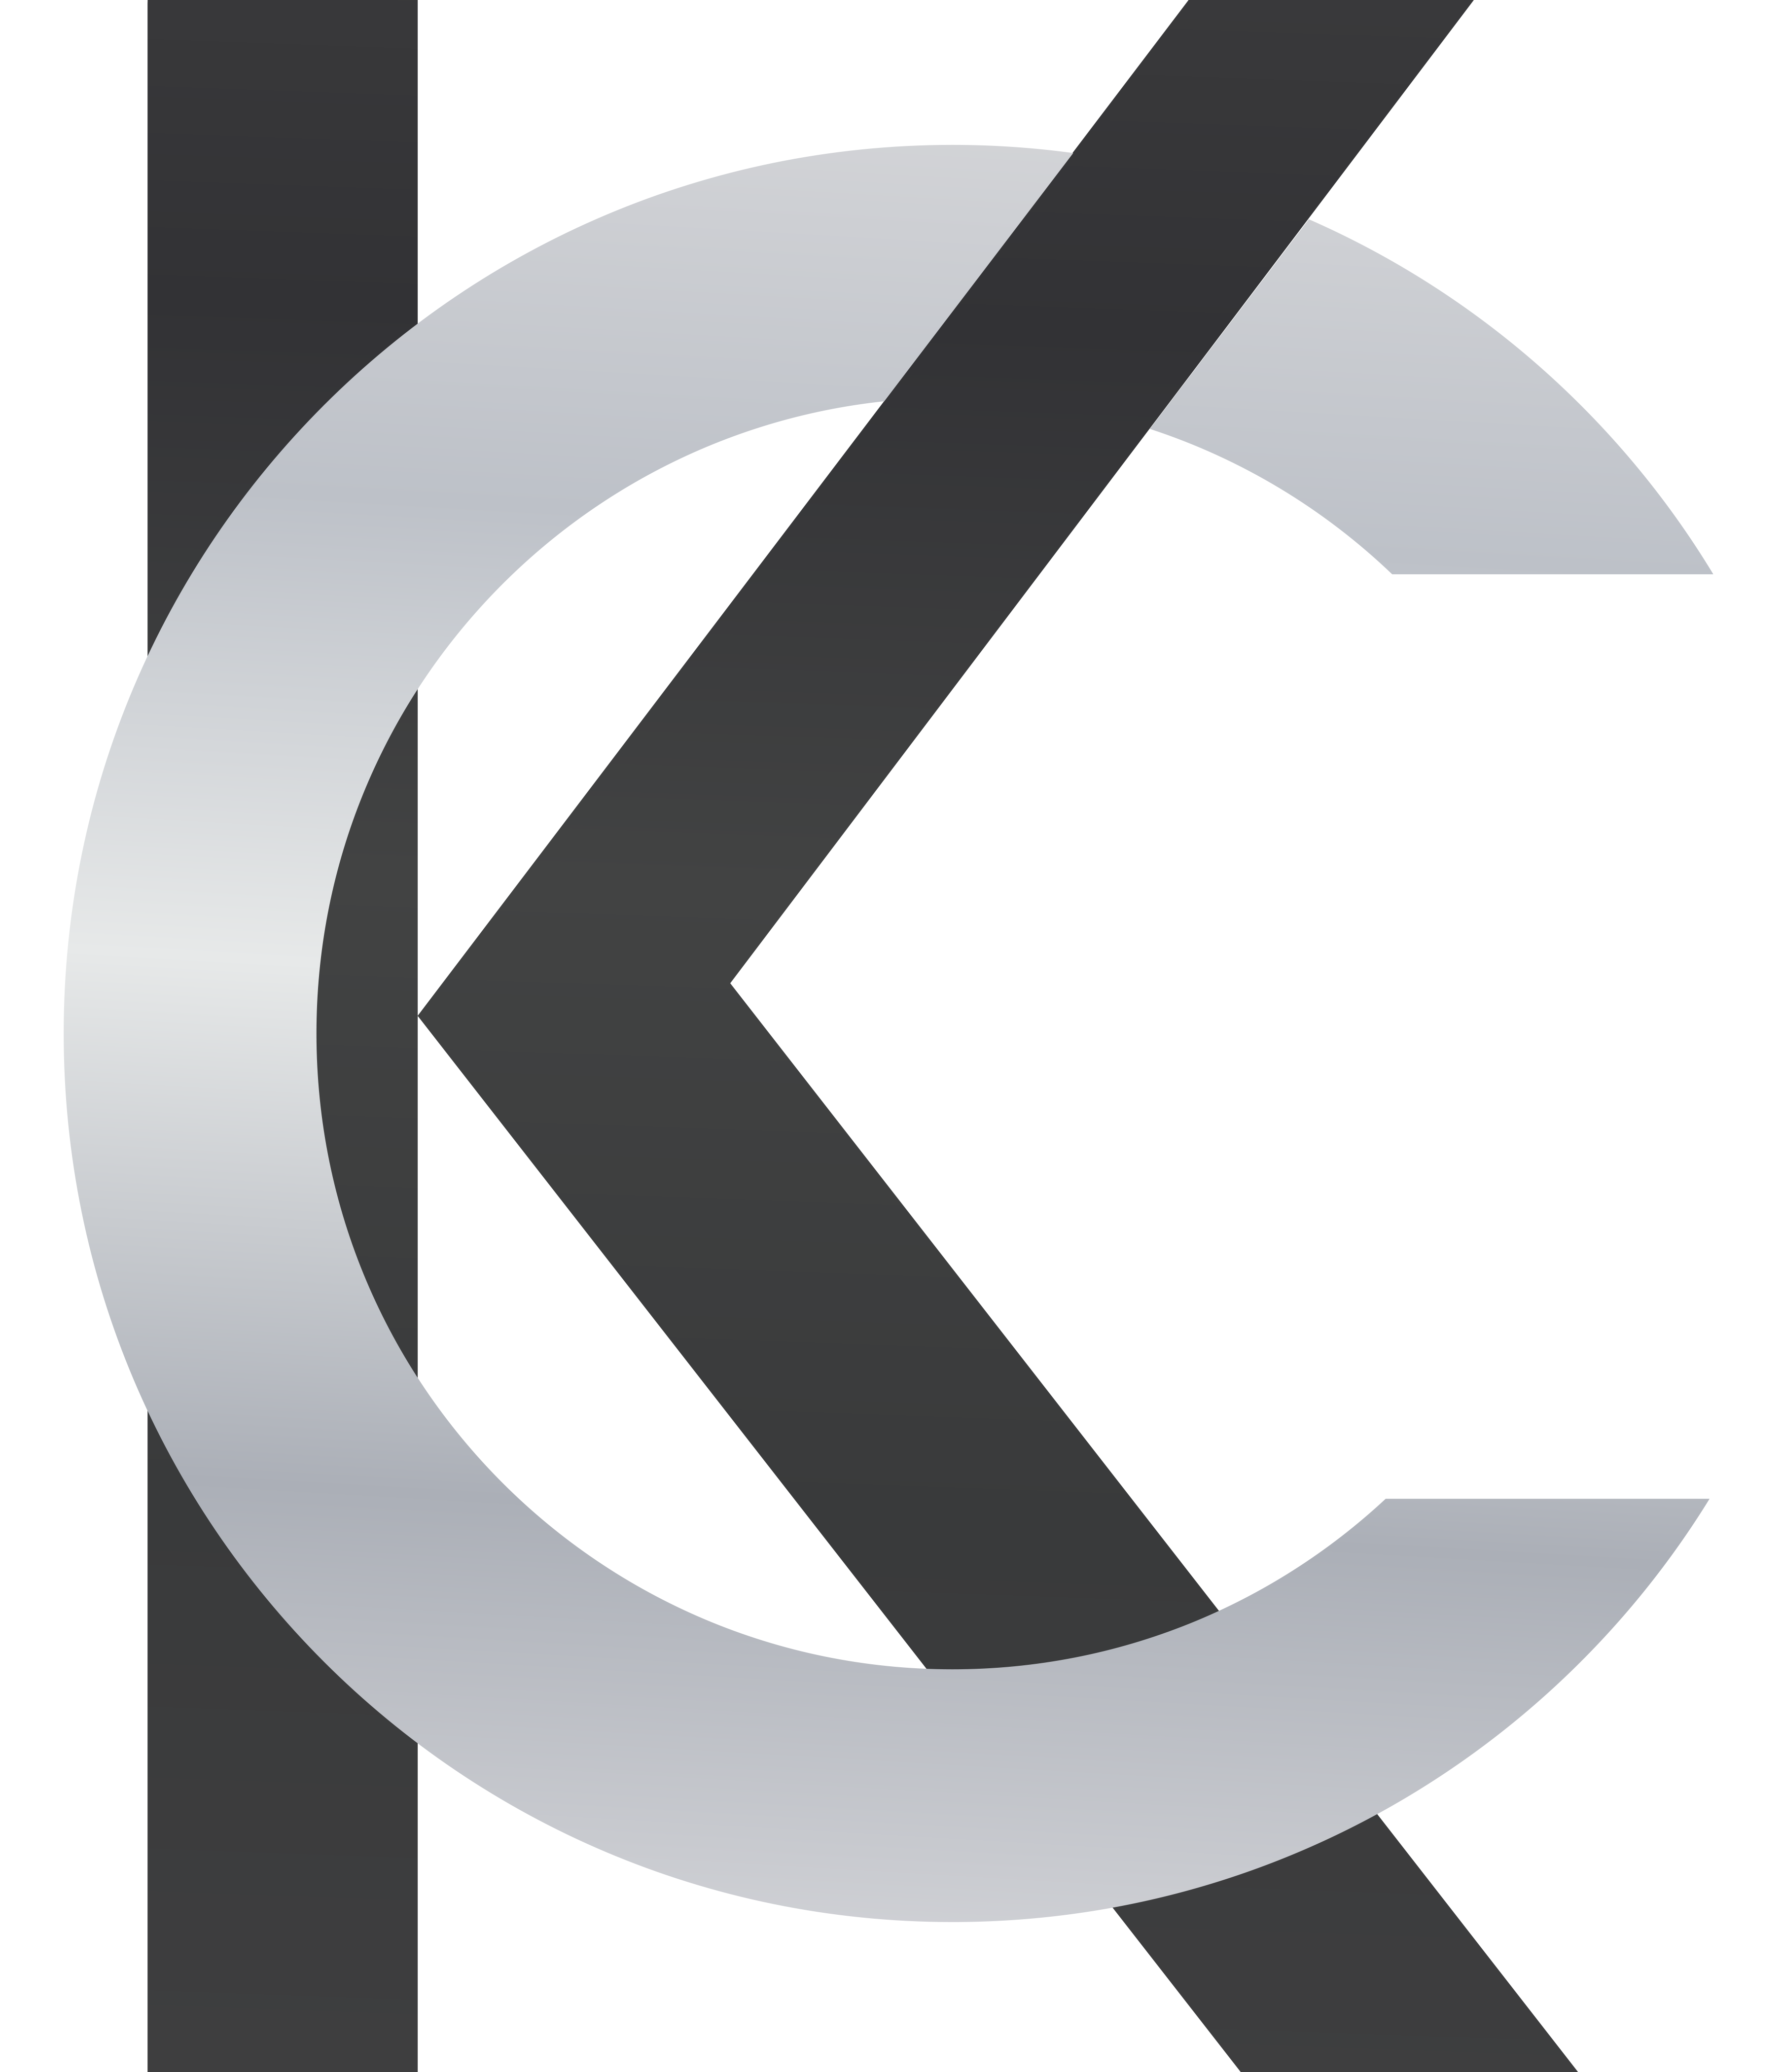 kc icon